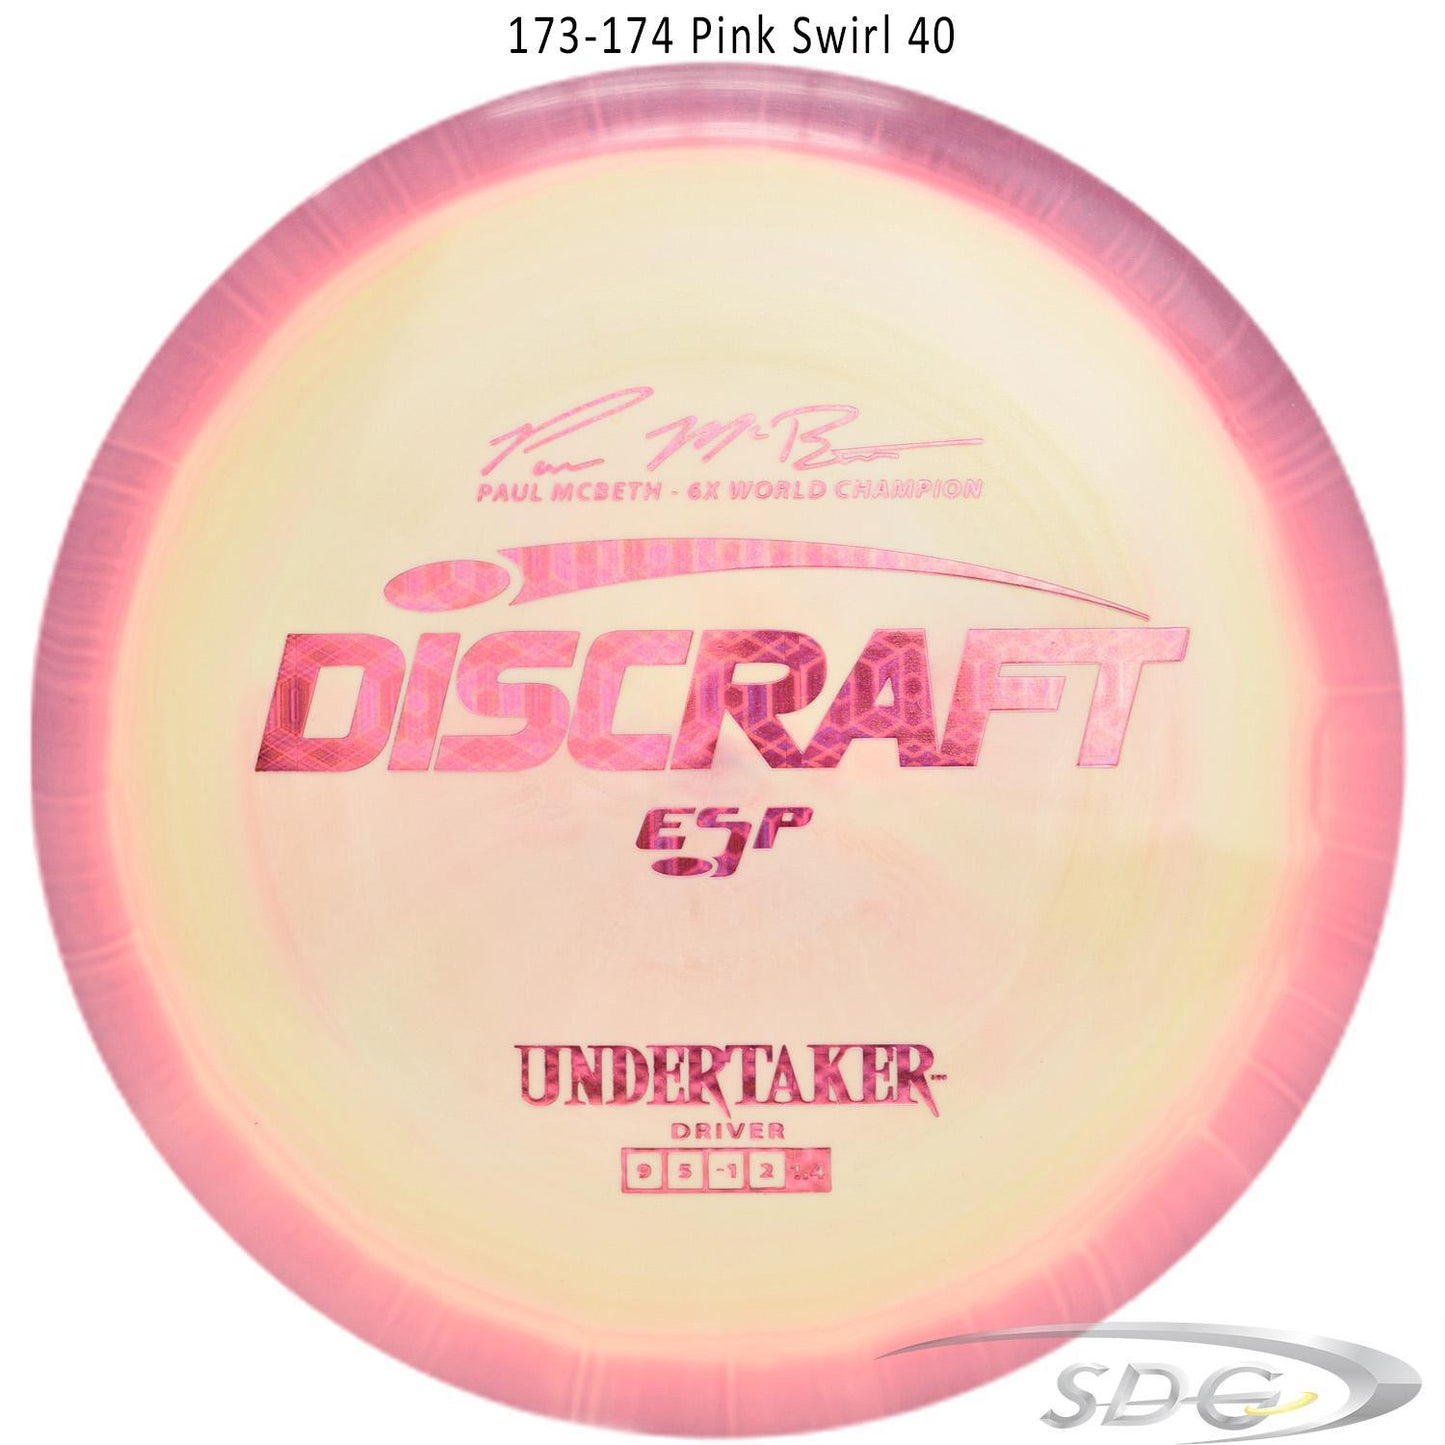 discraft-esp-undertaker-6x-paul-mcbeth-signature-series-disc-golf-distance-driver-1 173-174 Pink Swirl 40 